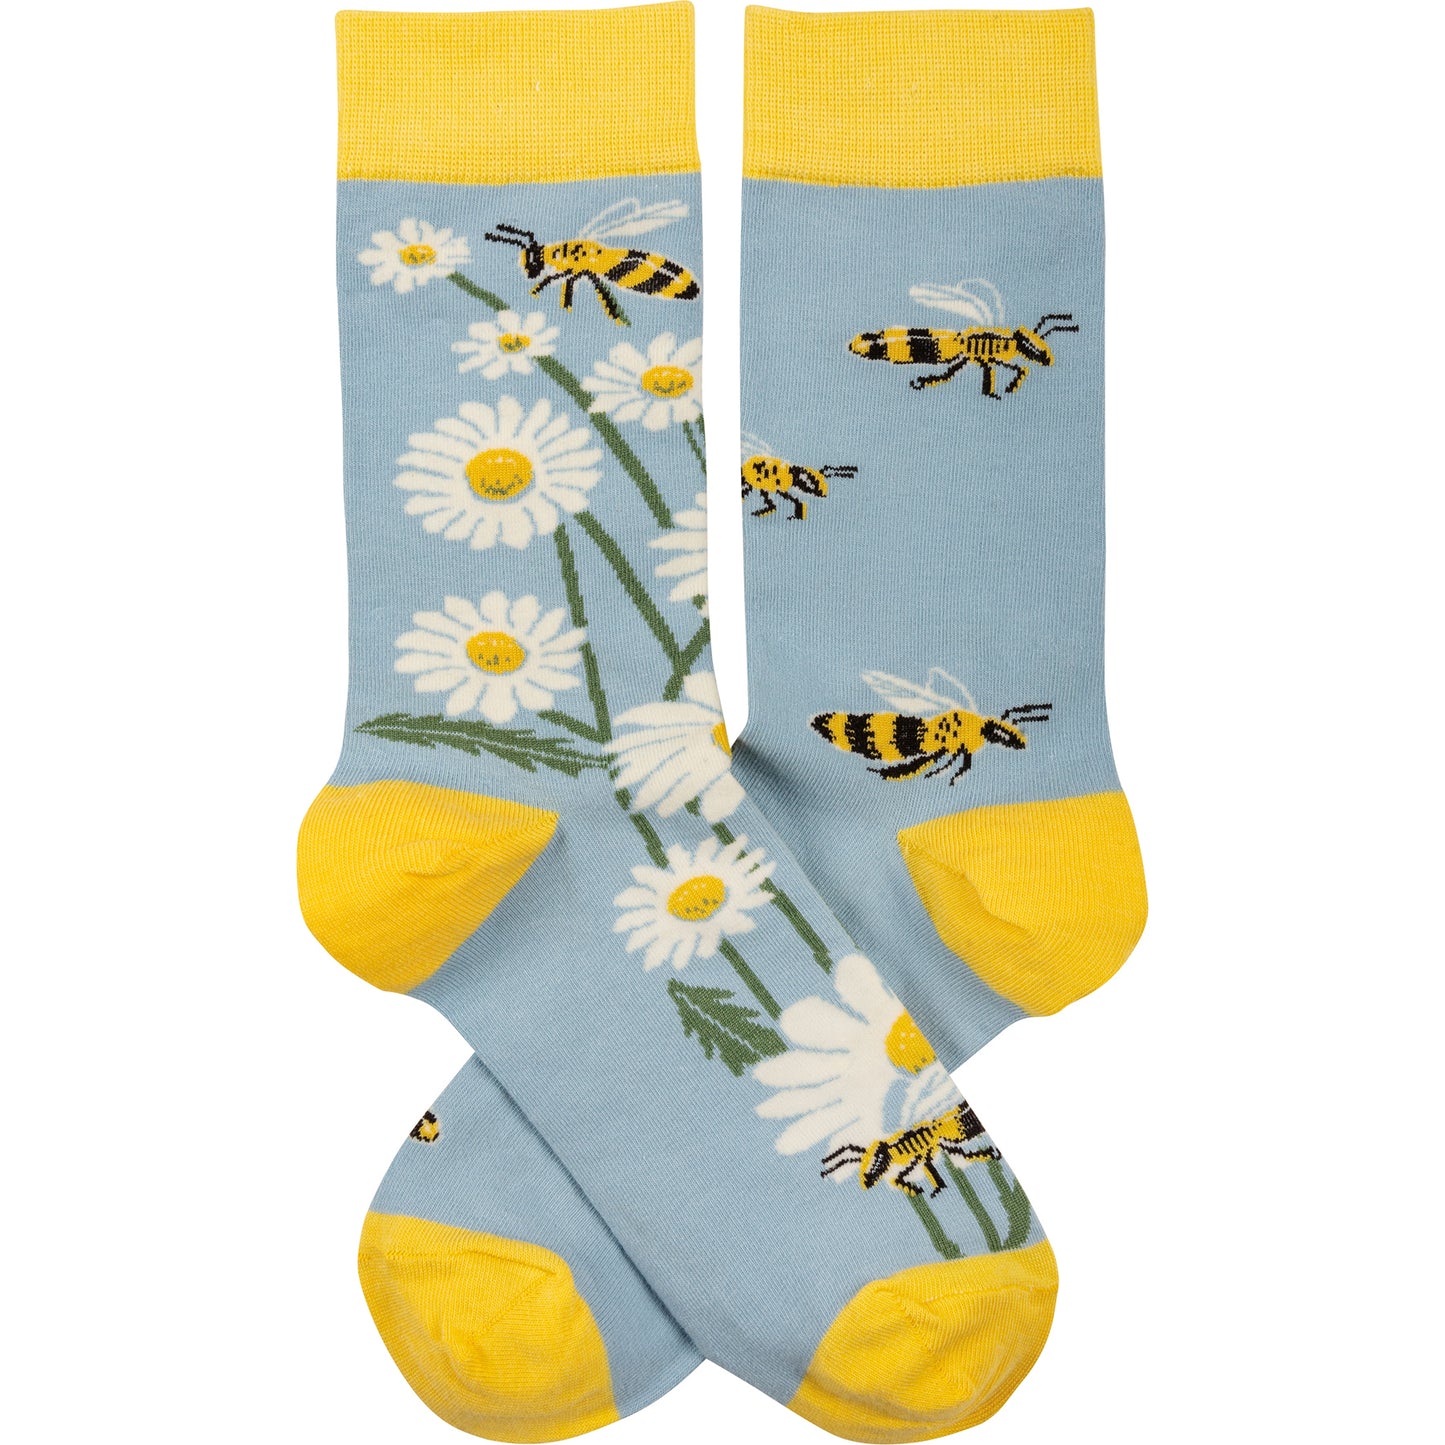 "Bees & Daises" Socks